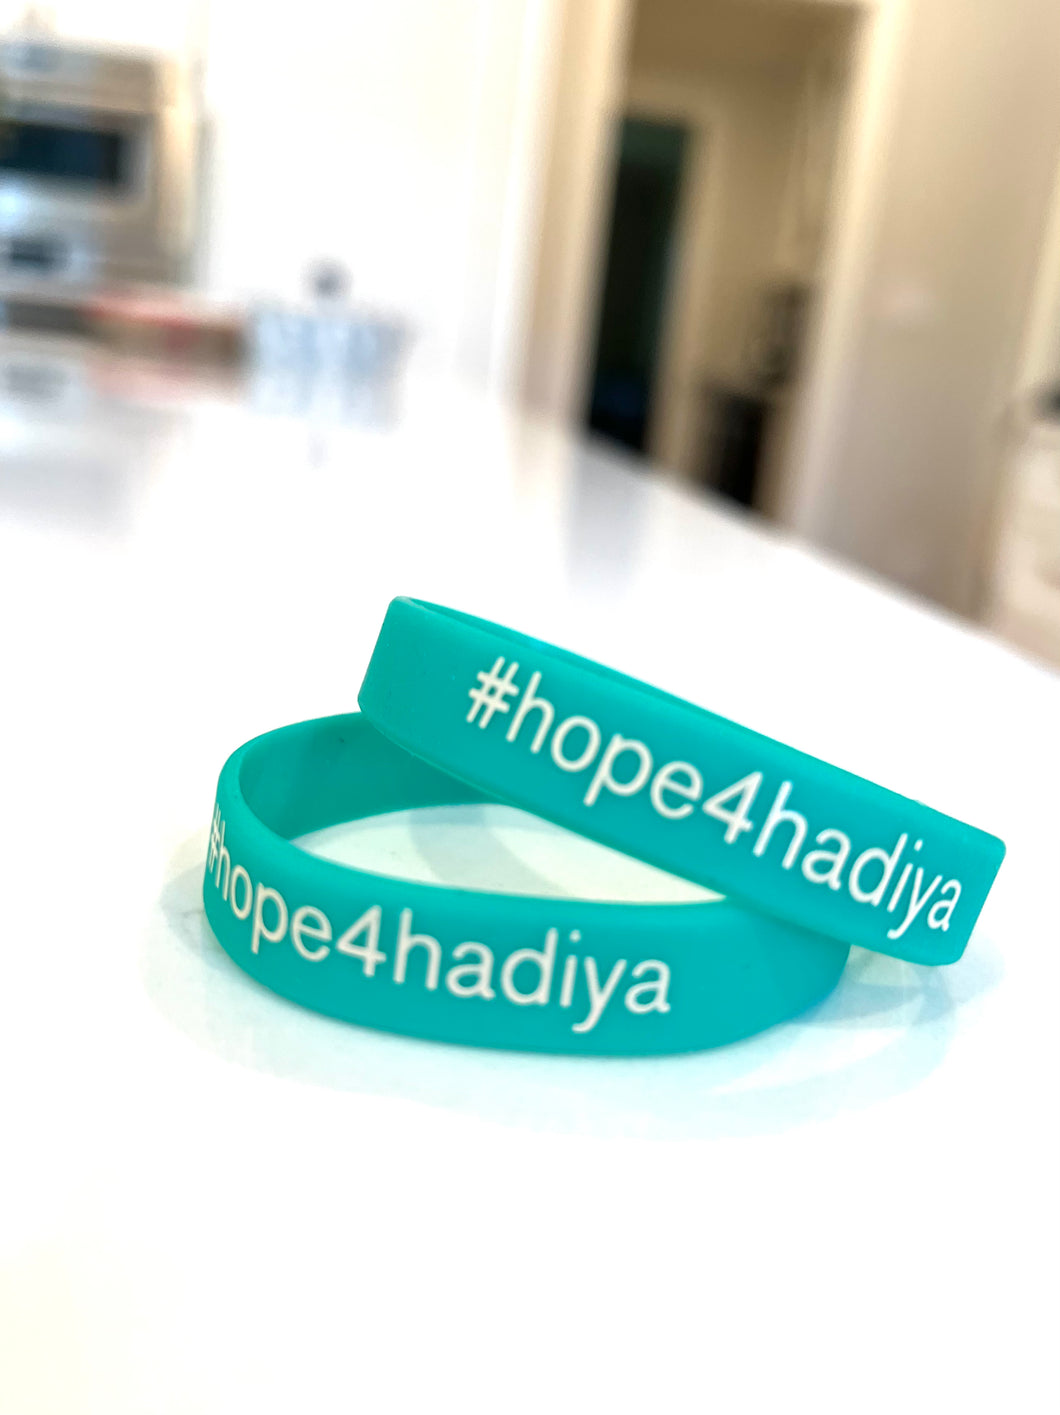 Hope 4 Hadiya band